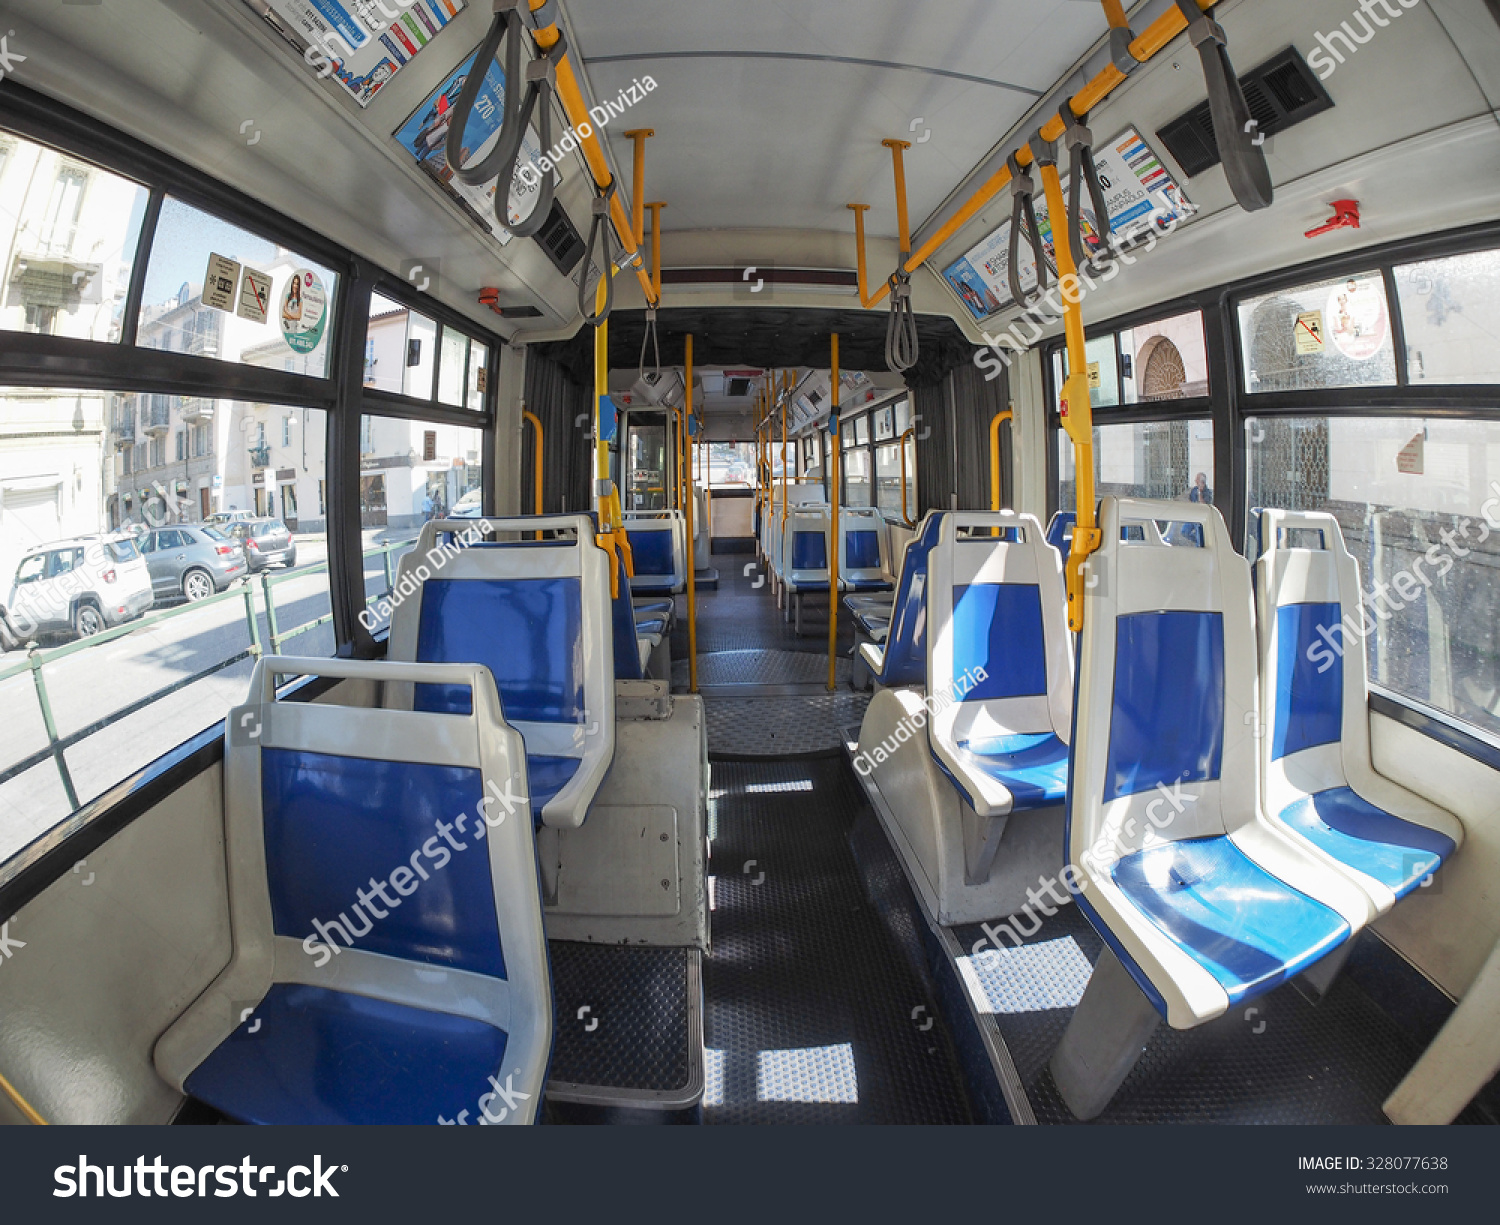 stock-photo-turin-italy-circa-september-interior-of-a-public-transport-bus-seen-with-fisheye-lens-328077638.jpg